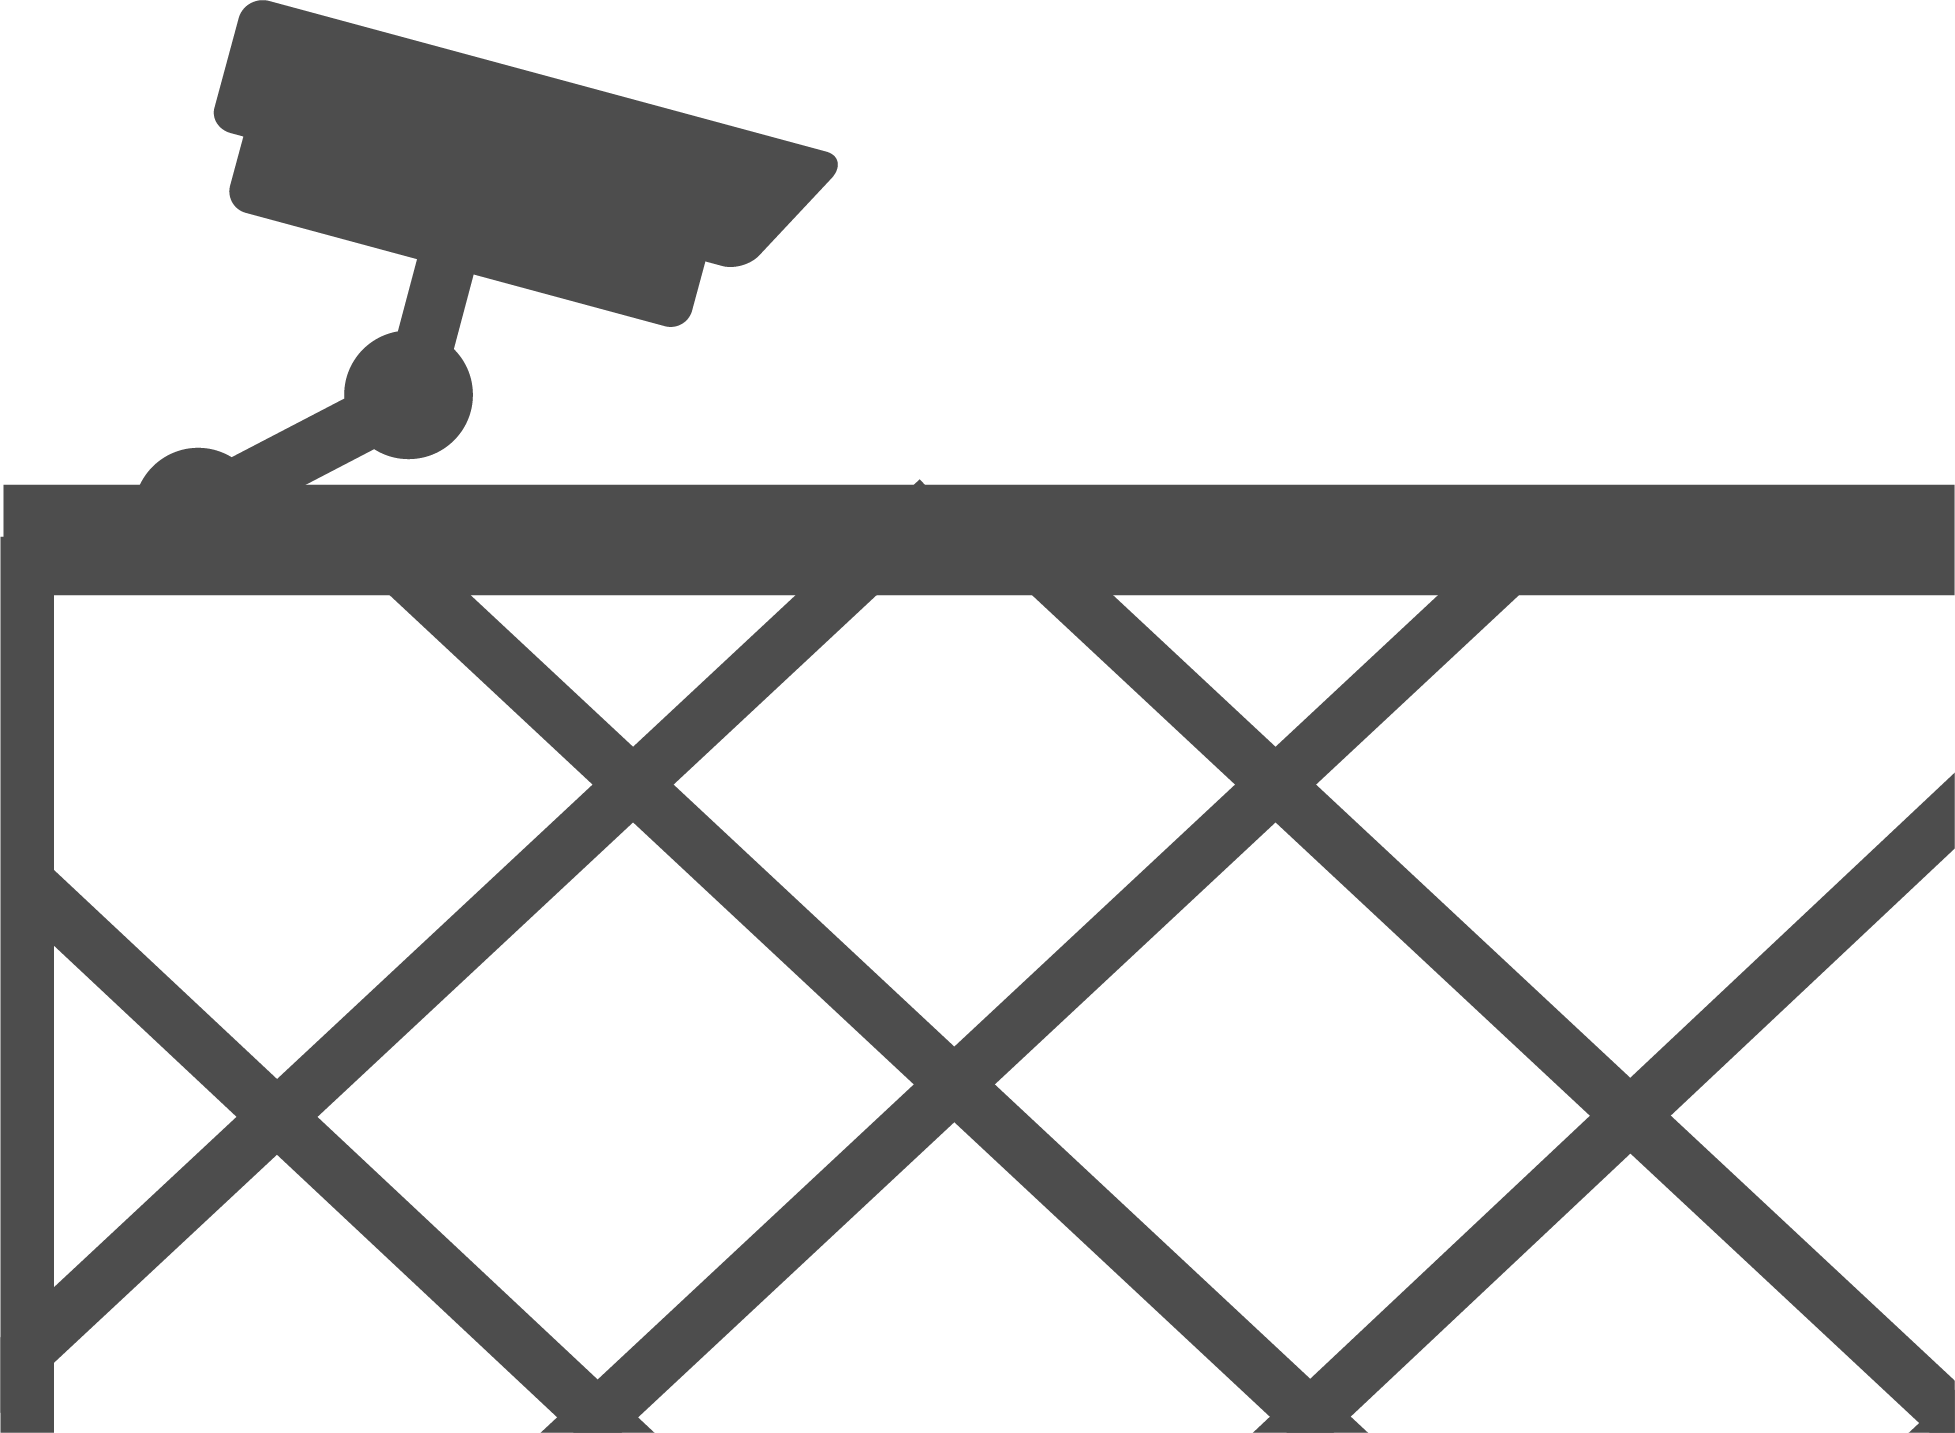 Perimeter Control, Surveillance, Security, NVR, Analytics